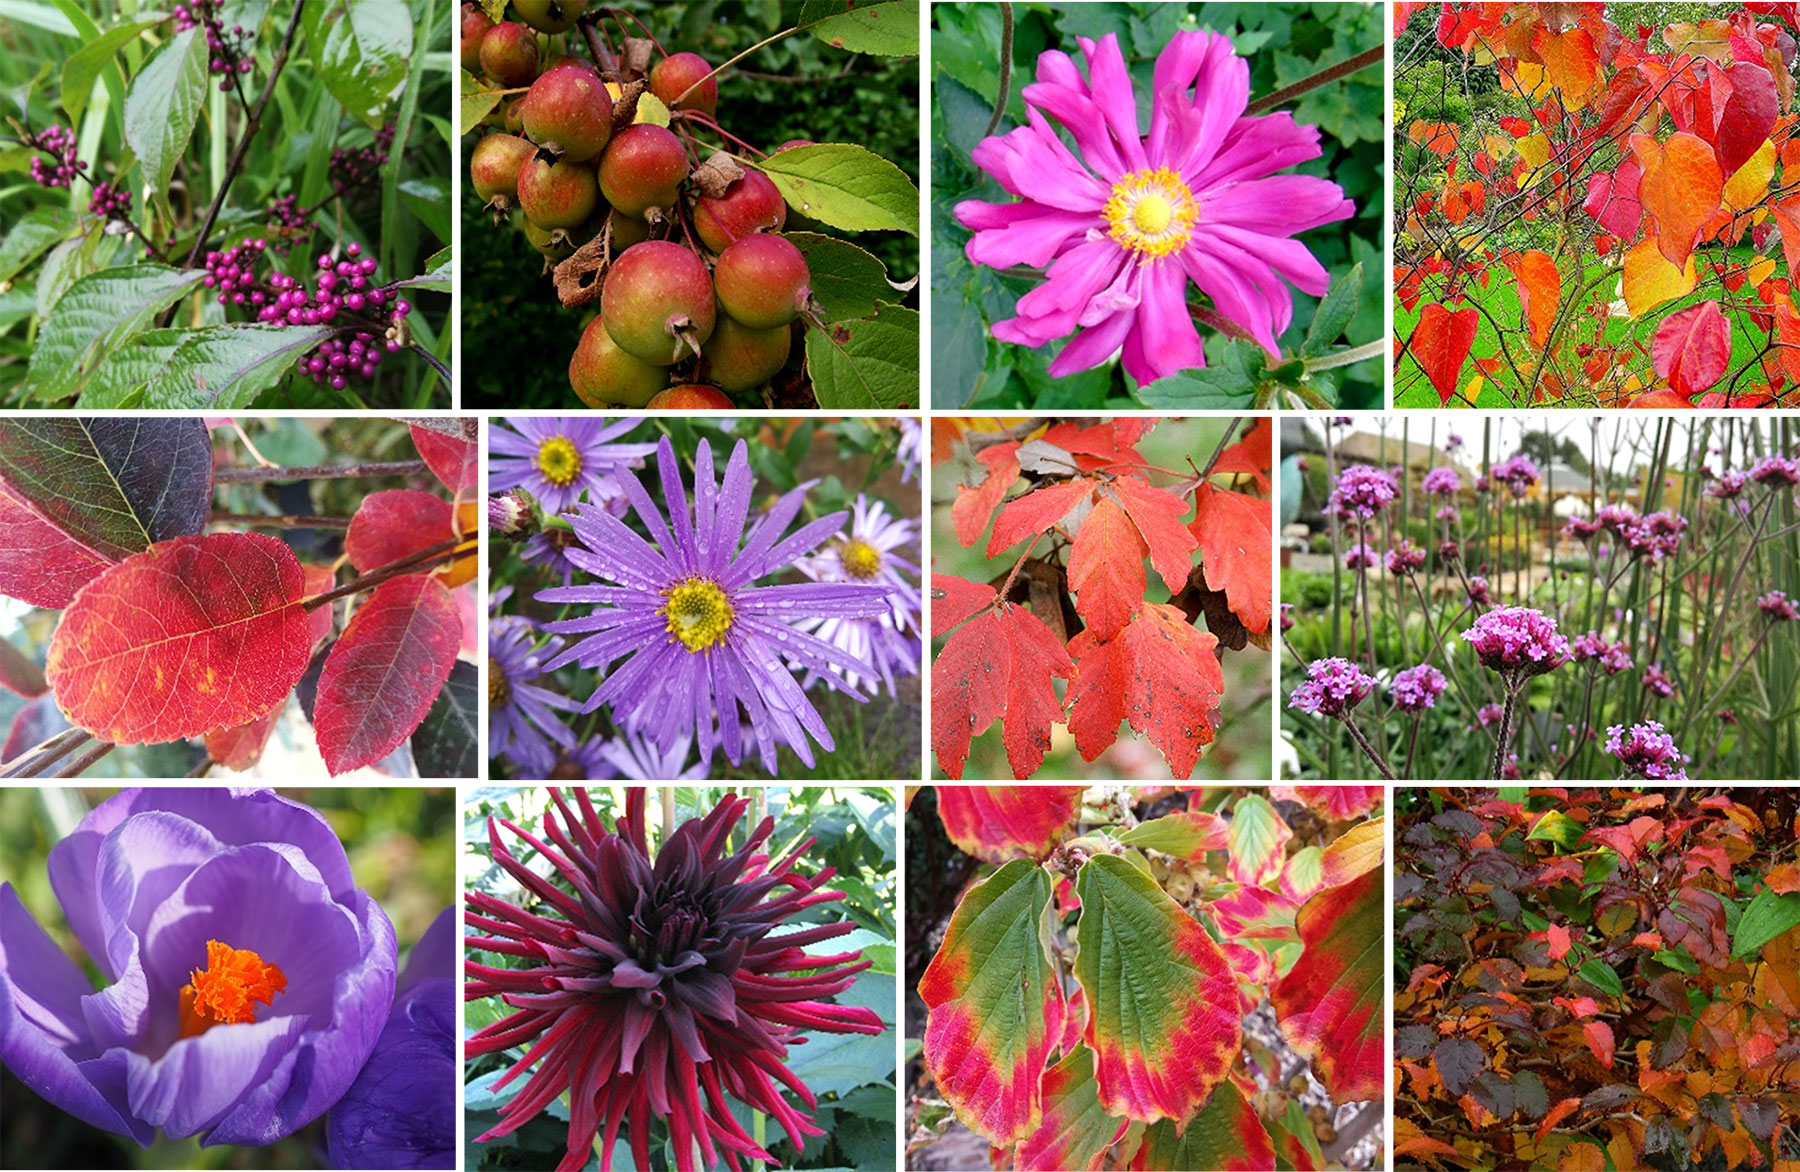 Colour In The Garden: Monthly Focus